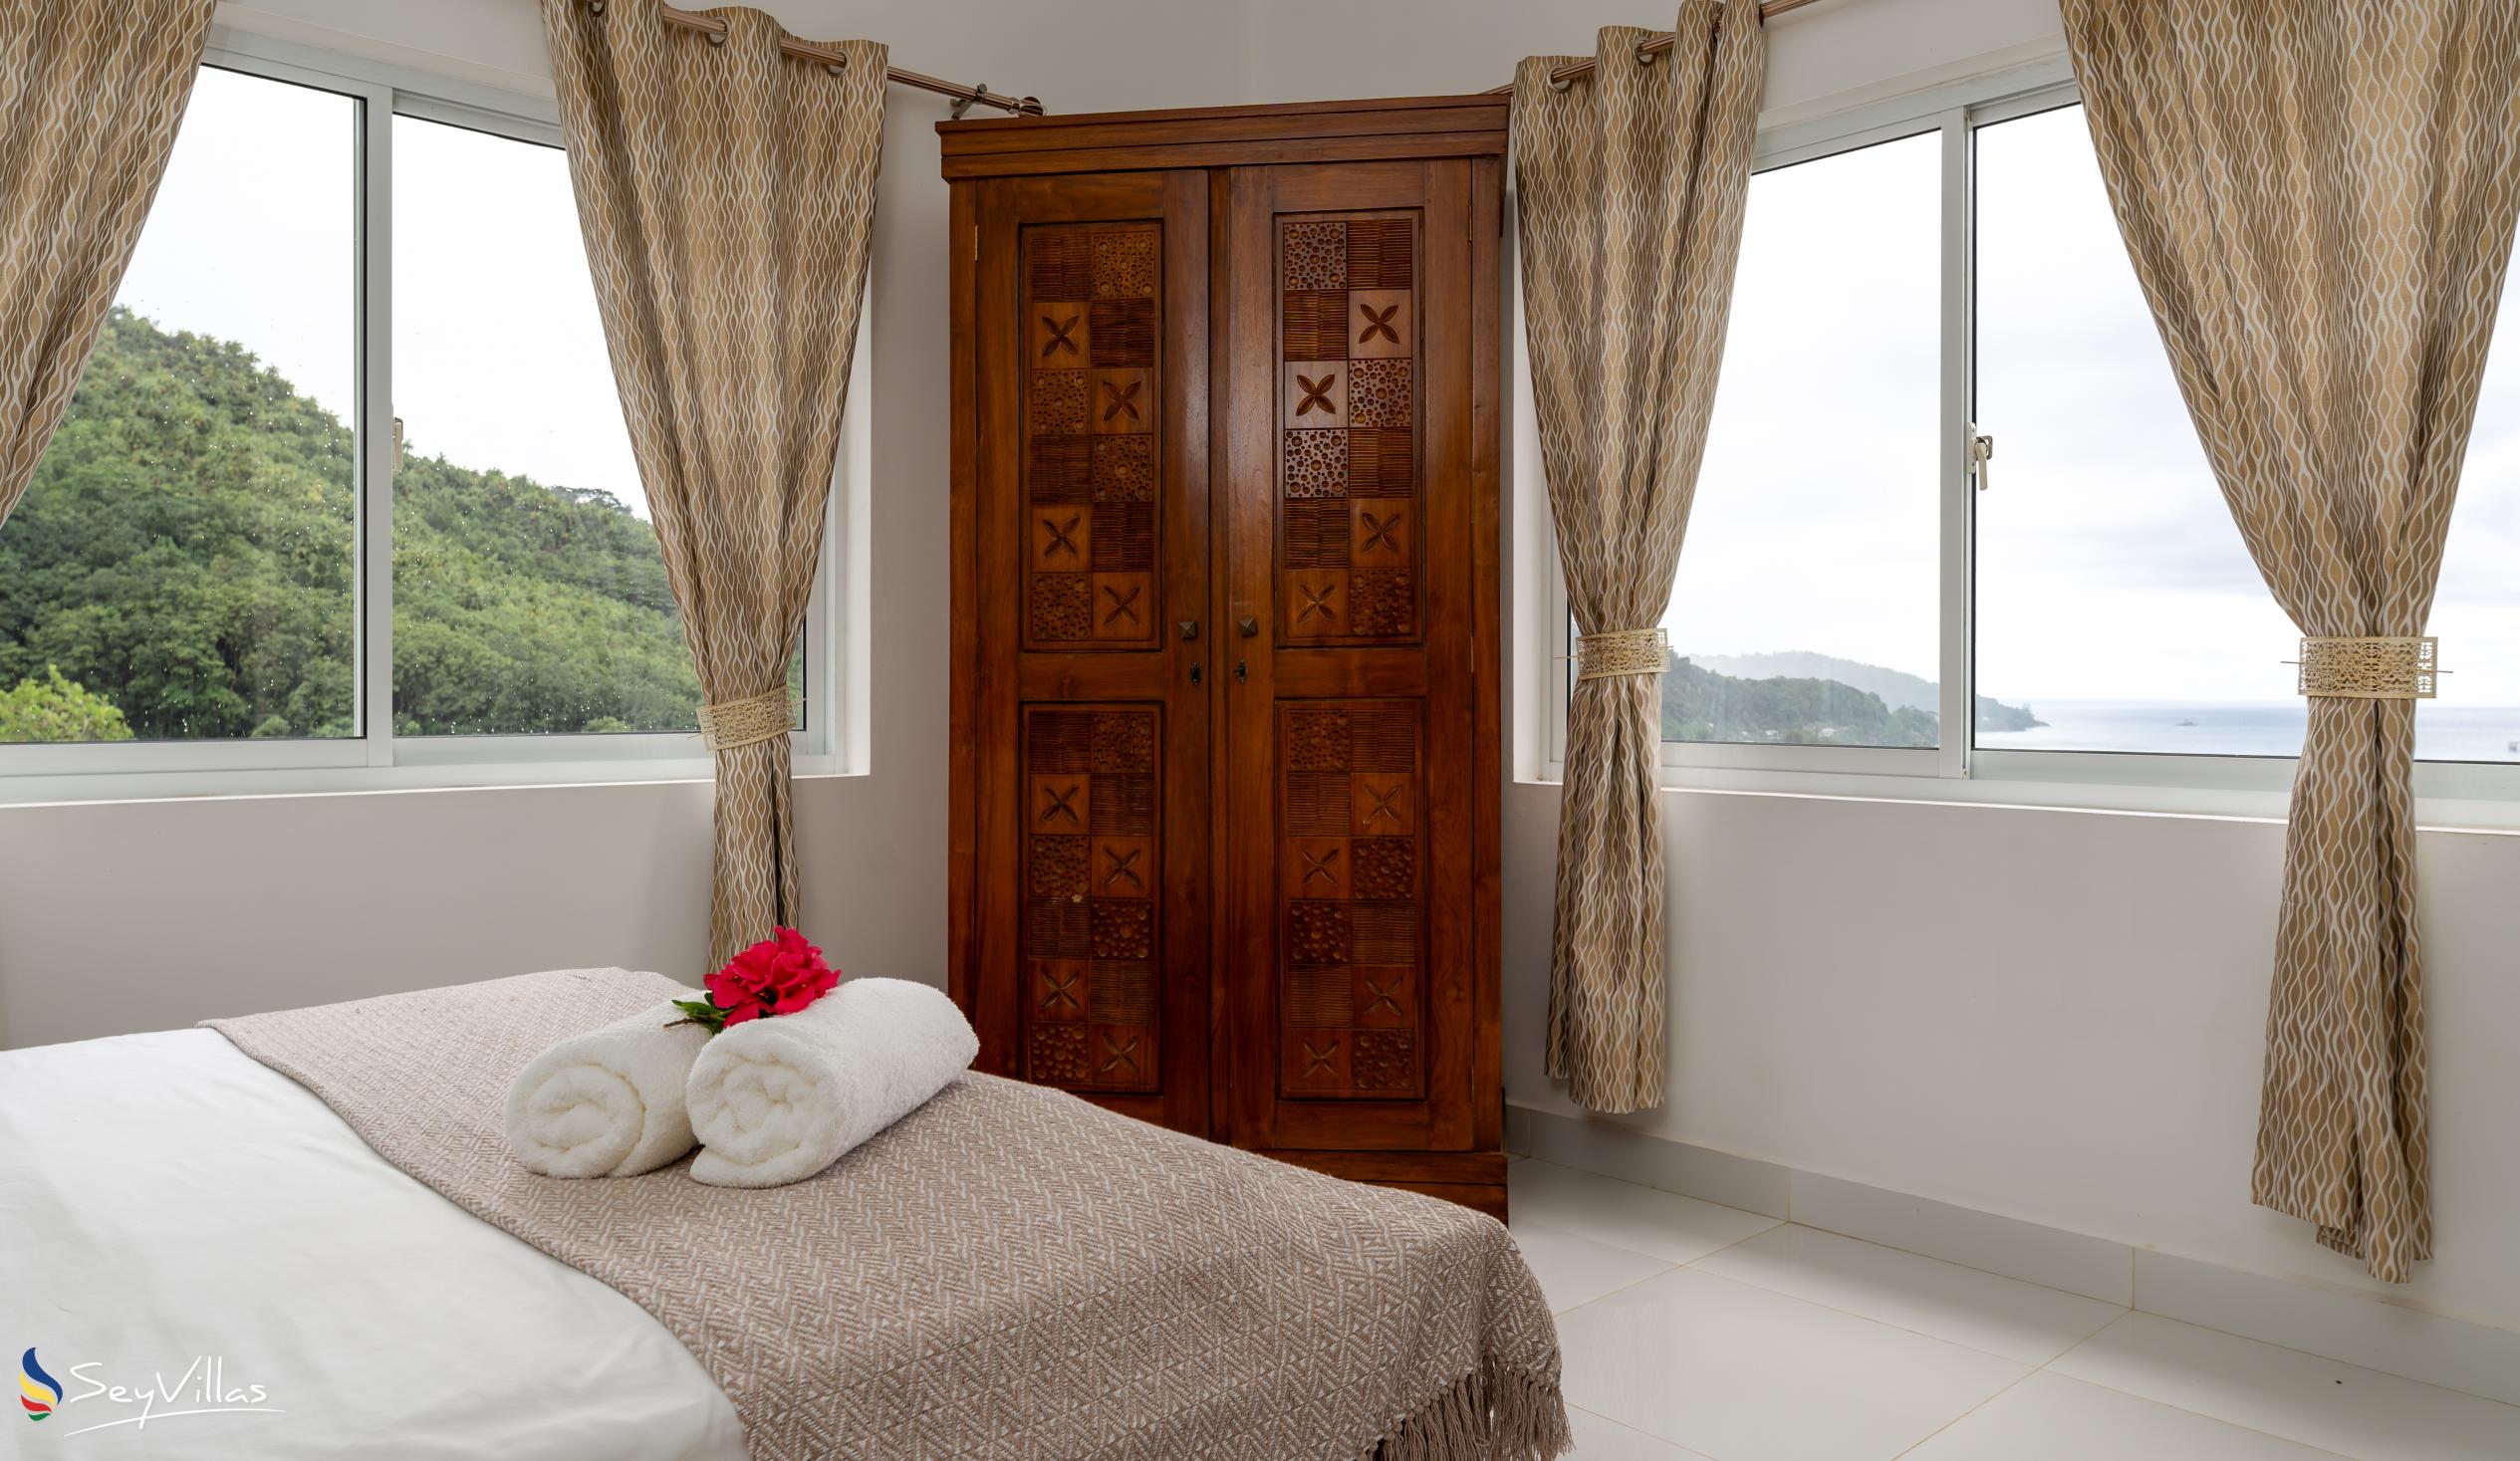 Foto 50: Cella Villa - Appartement 2 chambres - Mahé (Seychelles)